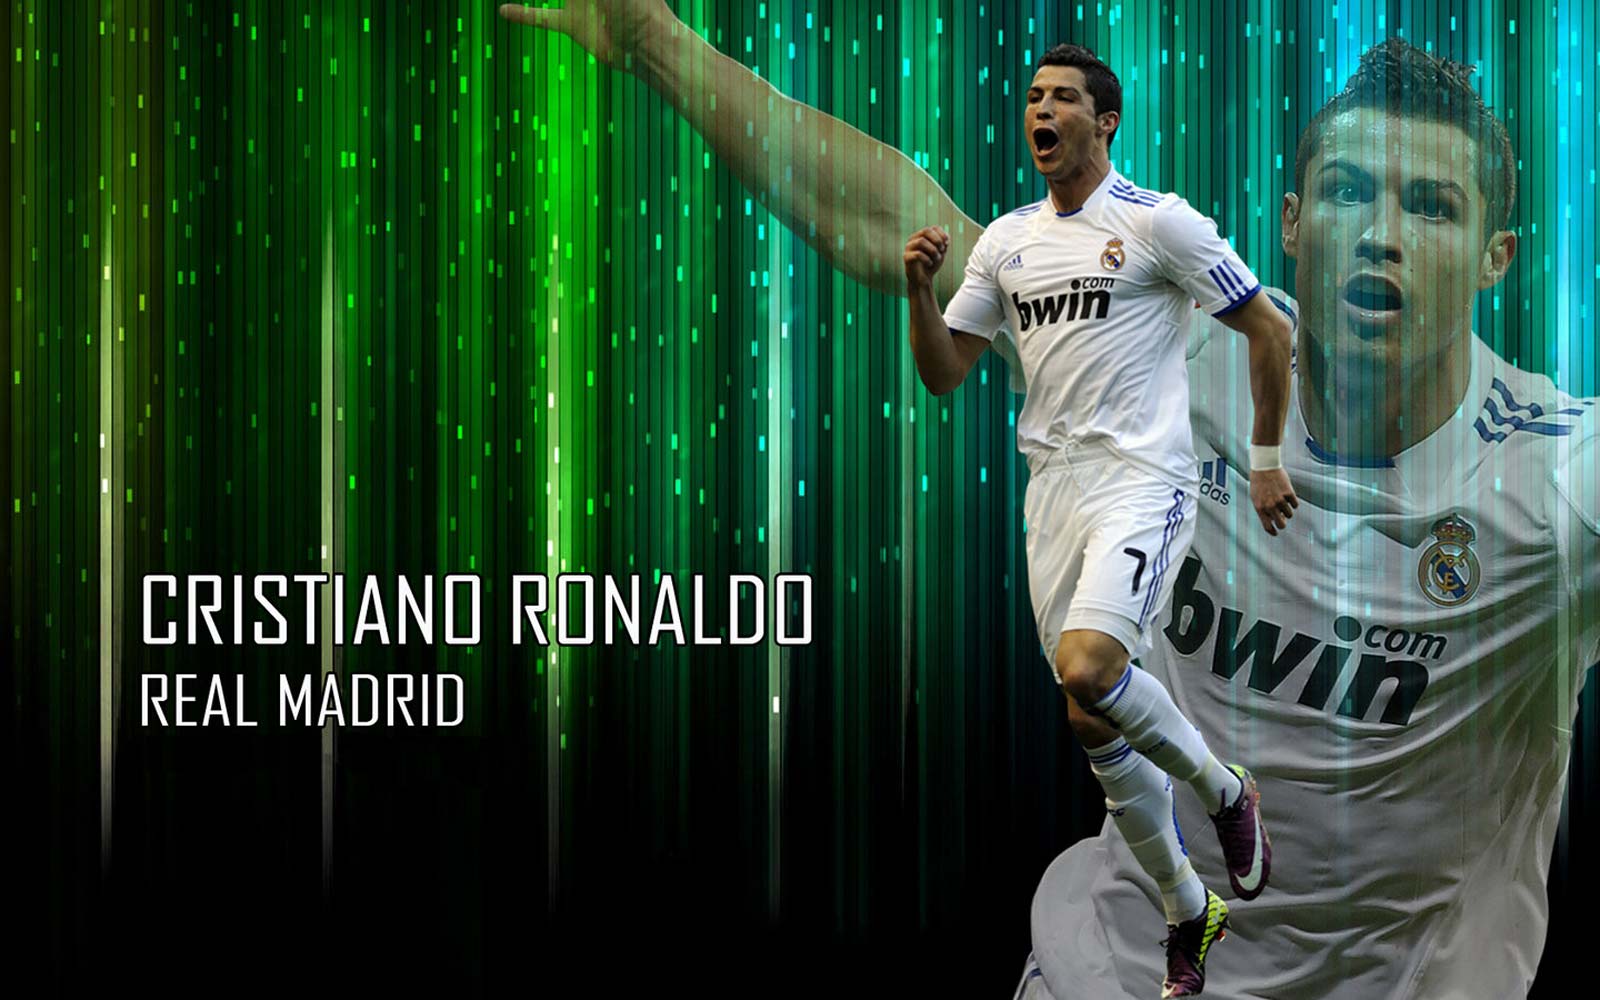 http://4.bp.blogspot.com/-qpuG9Z60aNQ/UDpQW1B87mI/AAAAAAAAAB8/7gYoCibG_M4/s1600/Cristiano+Ronaldo+new+wallpaper+2012-2013+12.jpg